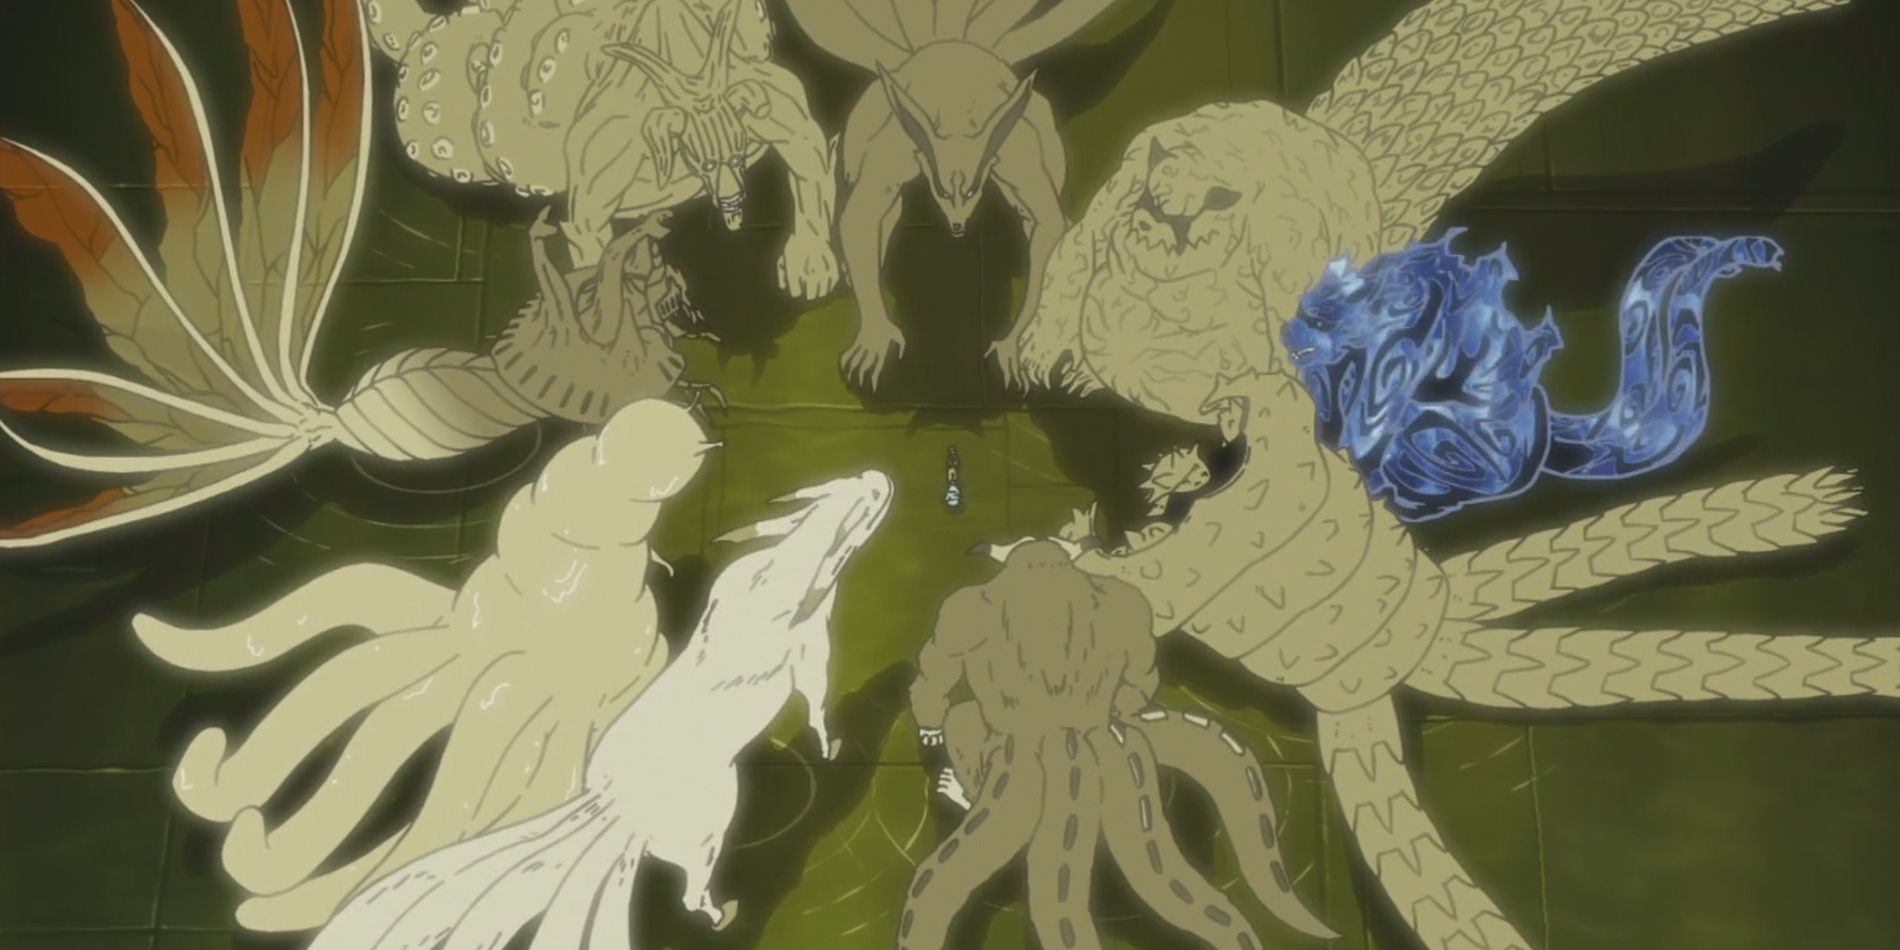 Naruto Tailed Beasts gathered in circle